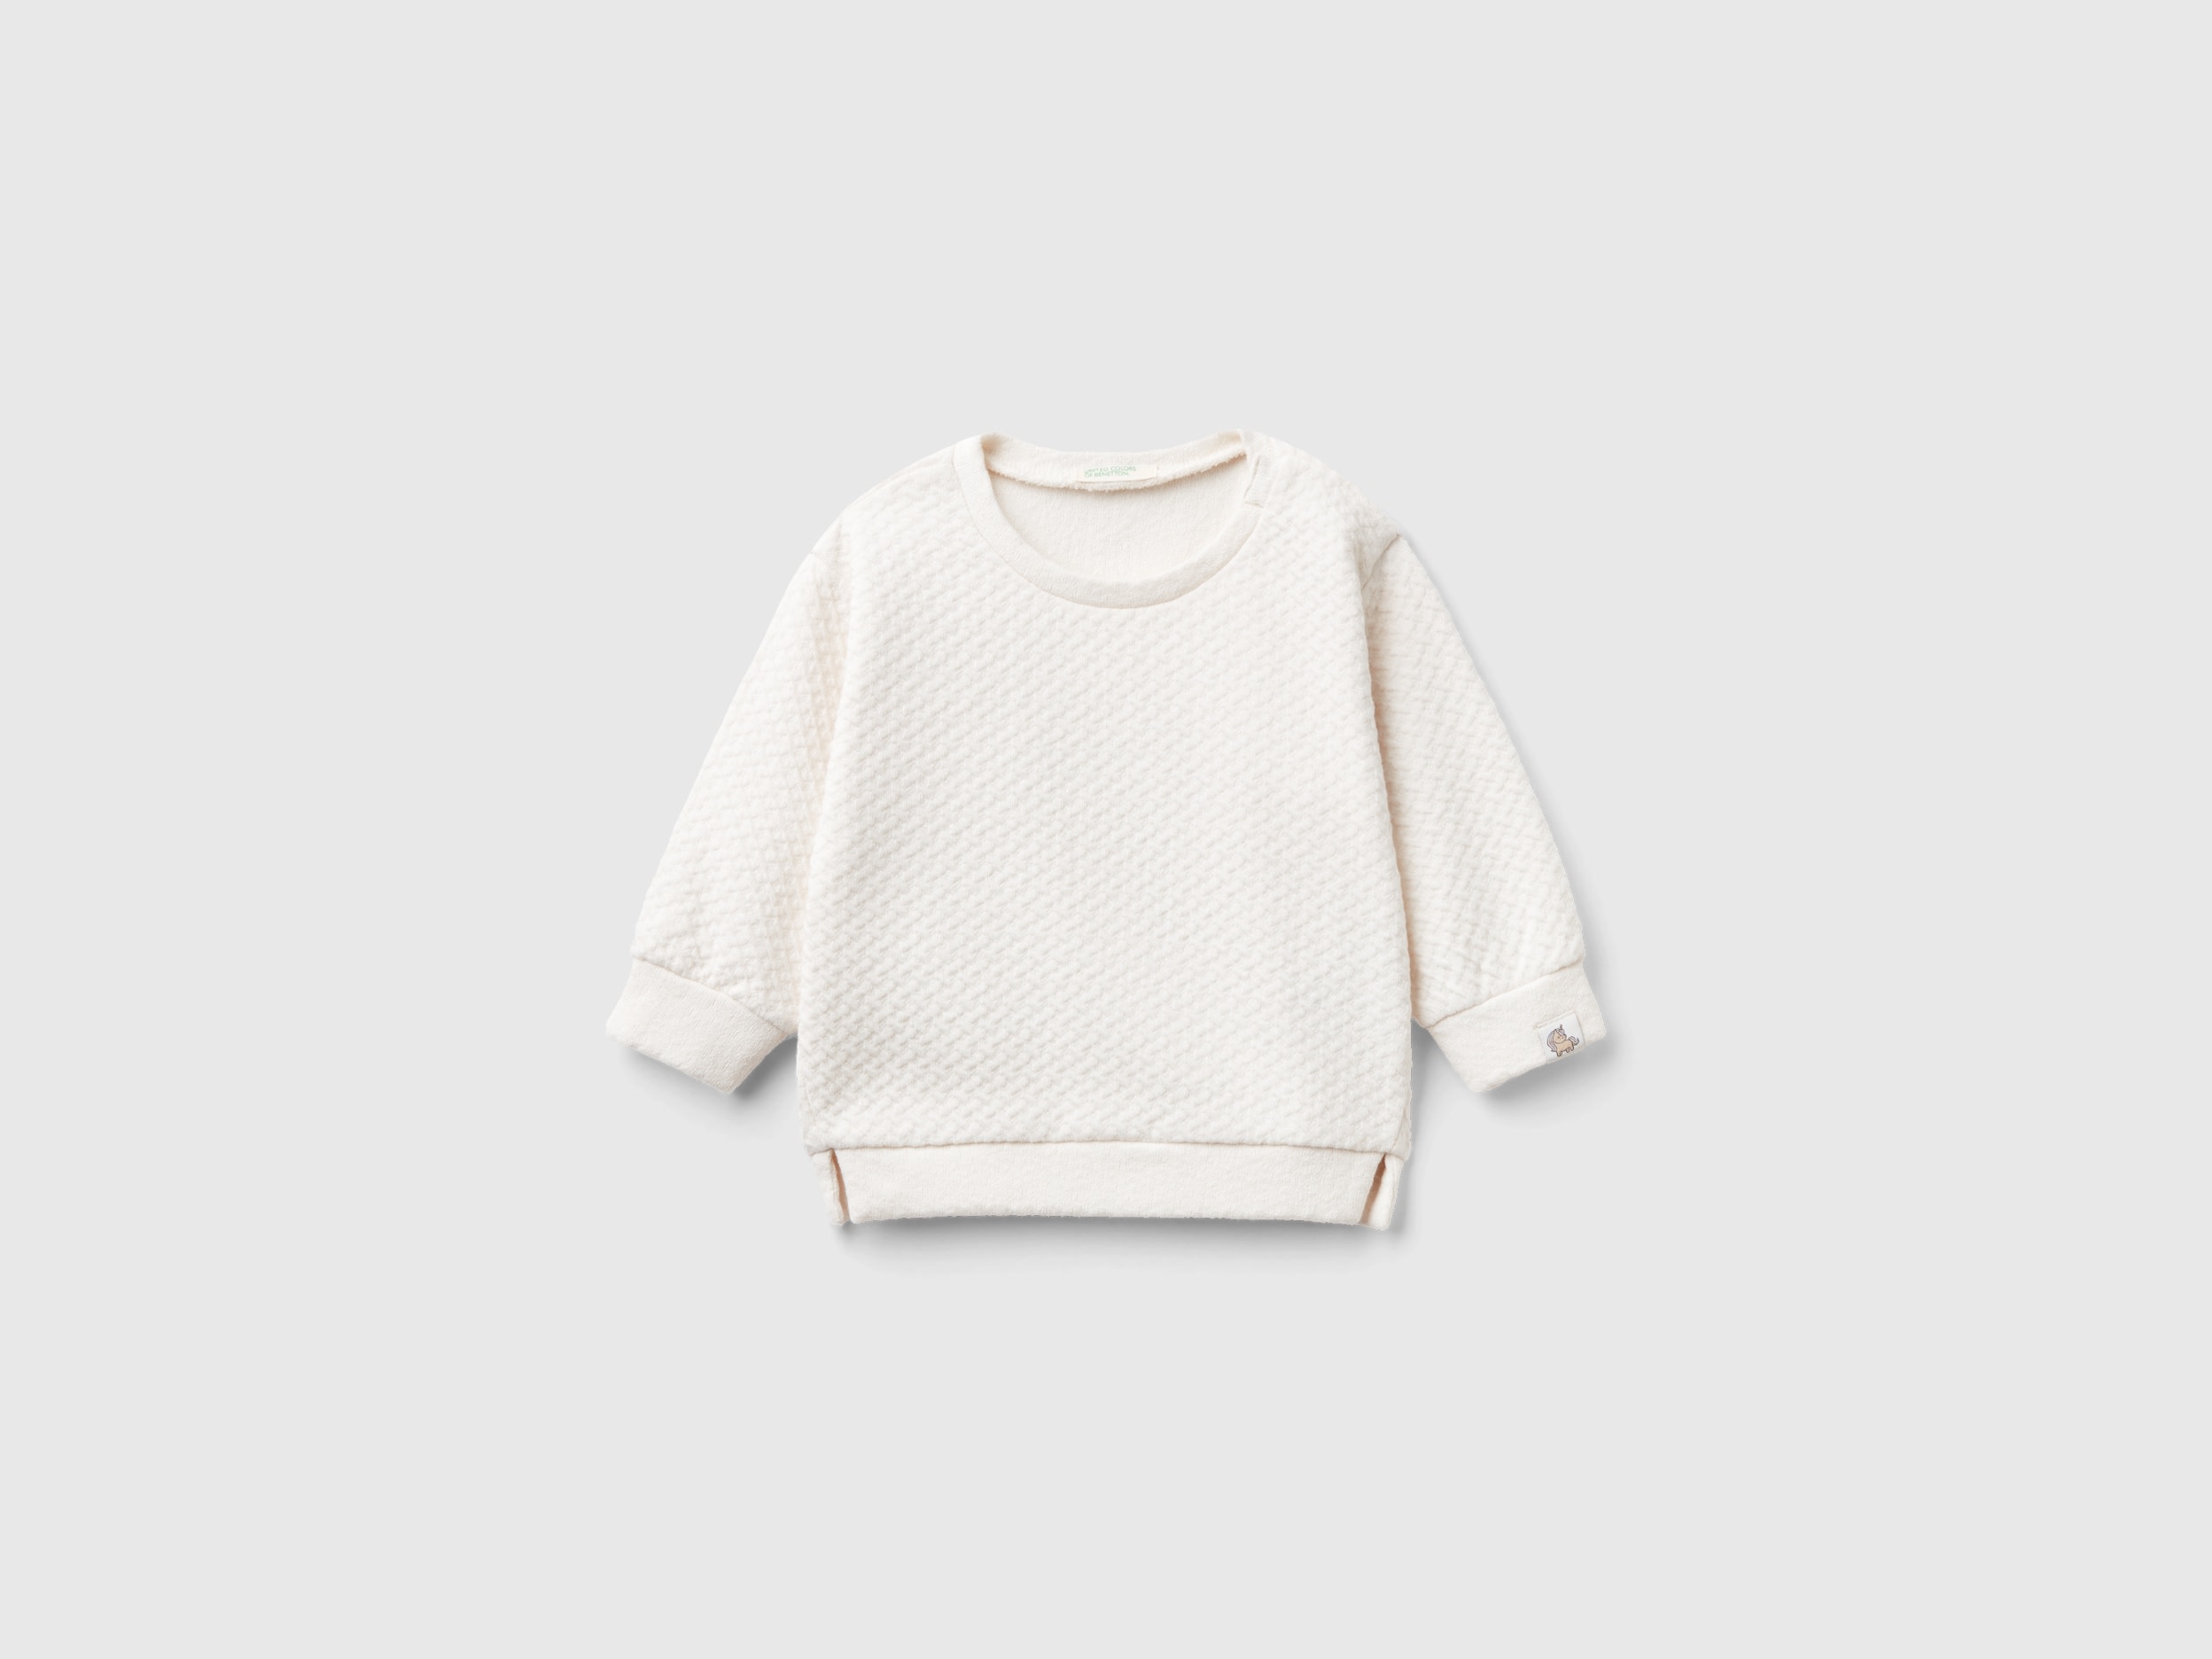 Image of Benetton, Pullover Jacquard Sweatshirt, size 50, Creamy White, Kids